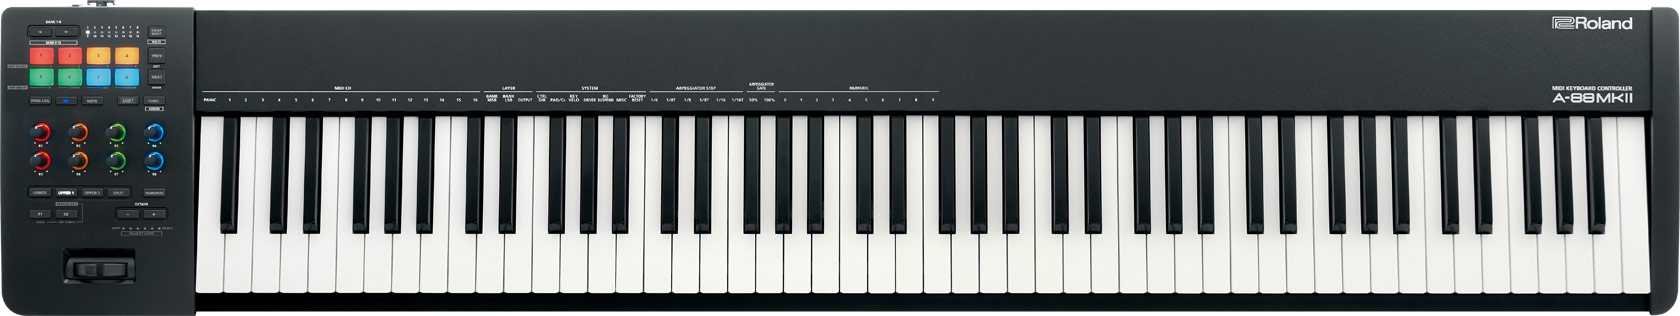 MIDI-клавиатура Roland A-88MKII